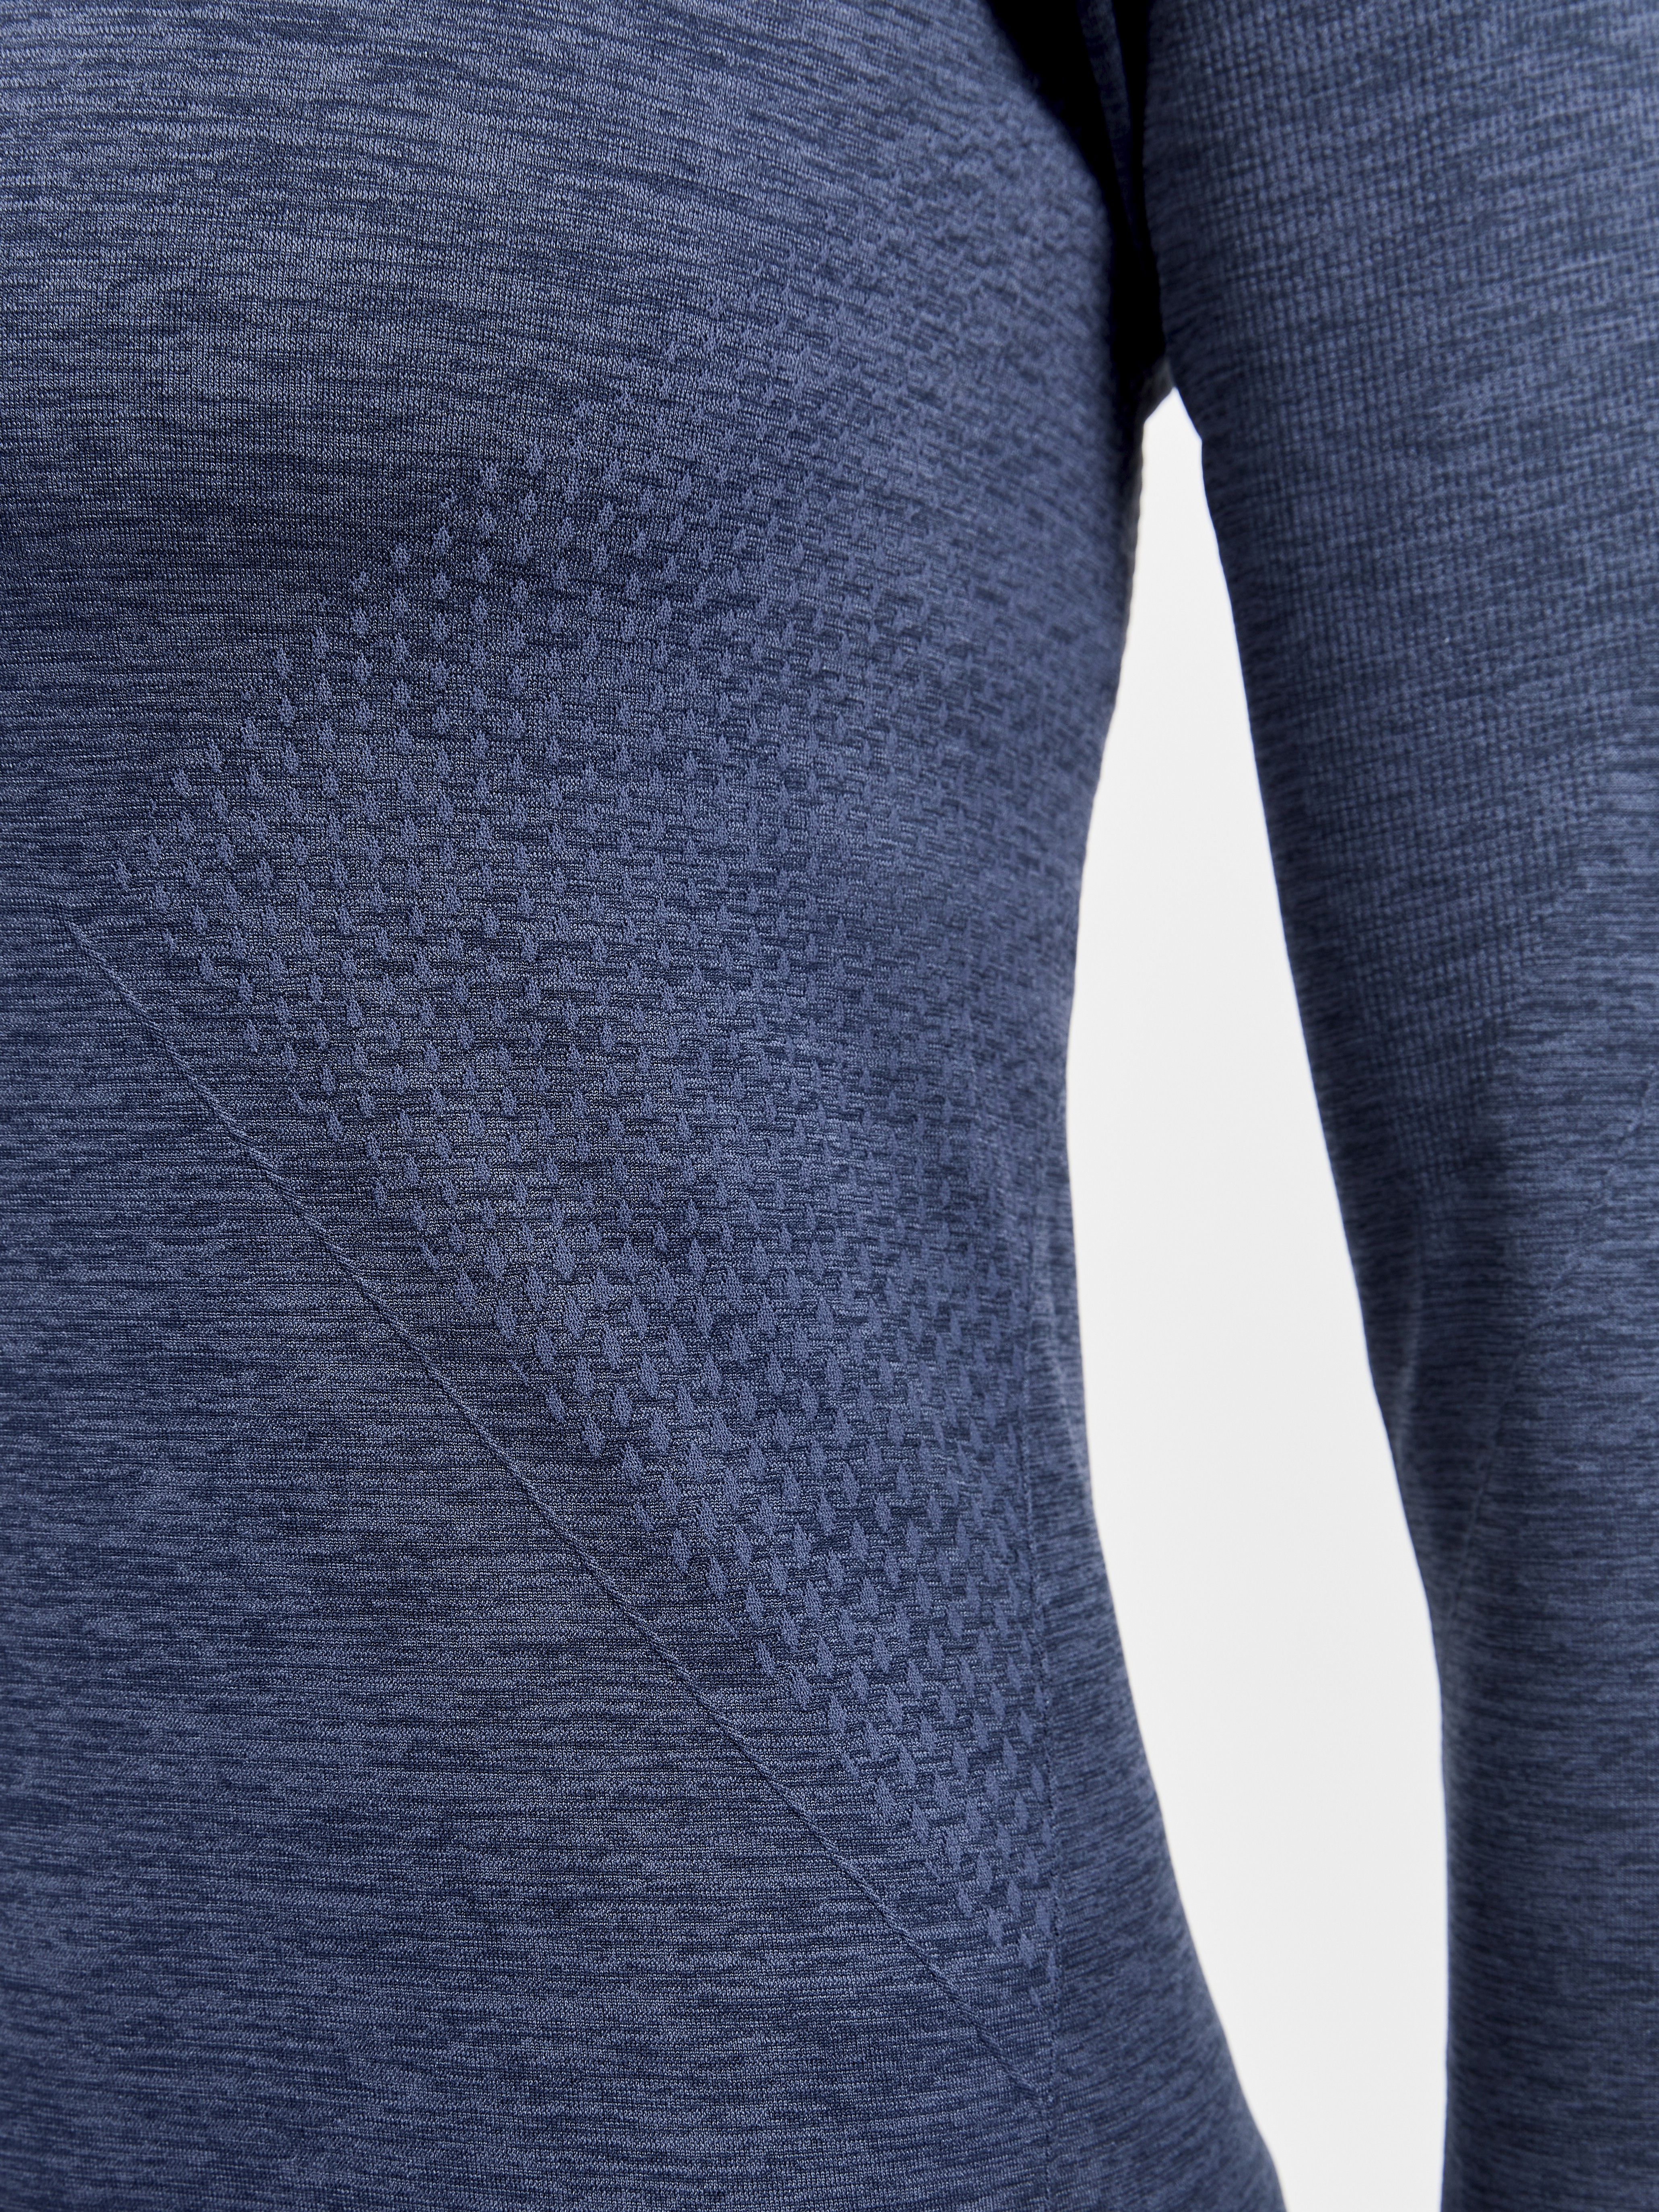 CORE Dry Active Comfort LS W - Navy blue | Craft Sportswear